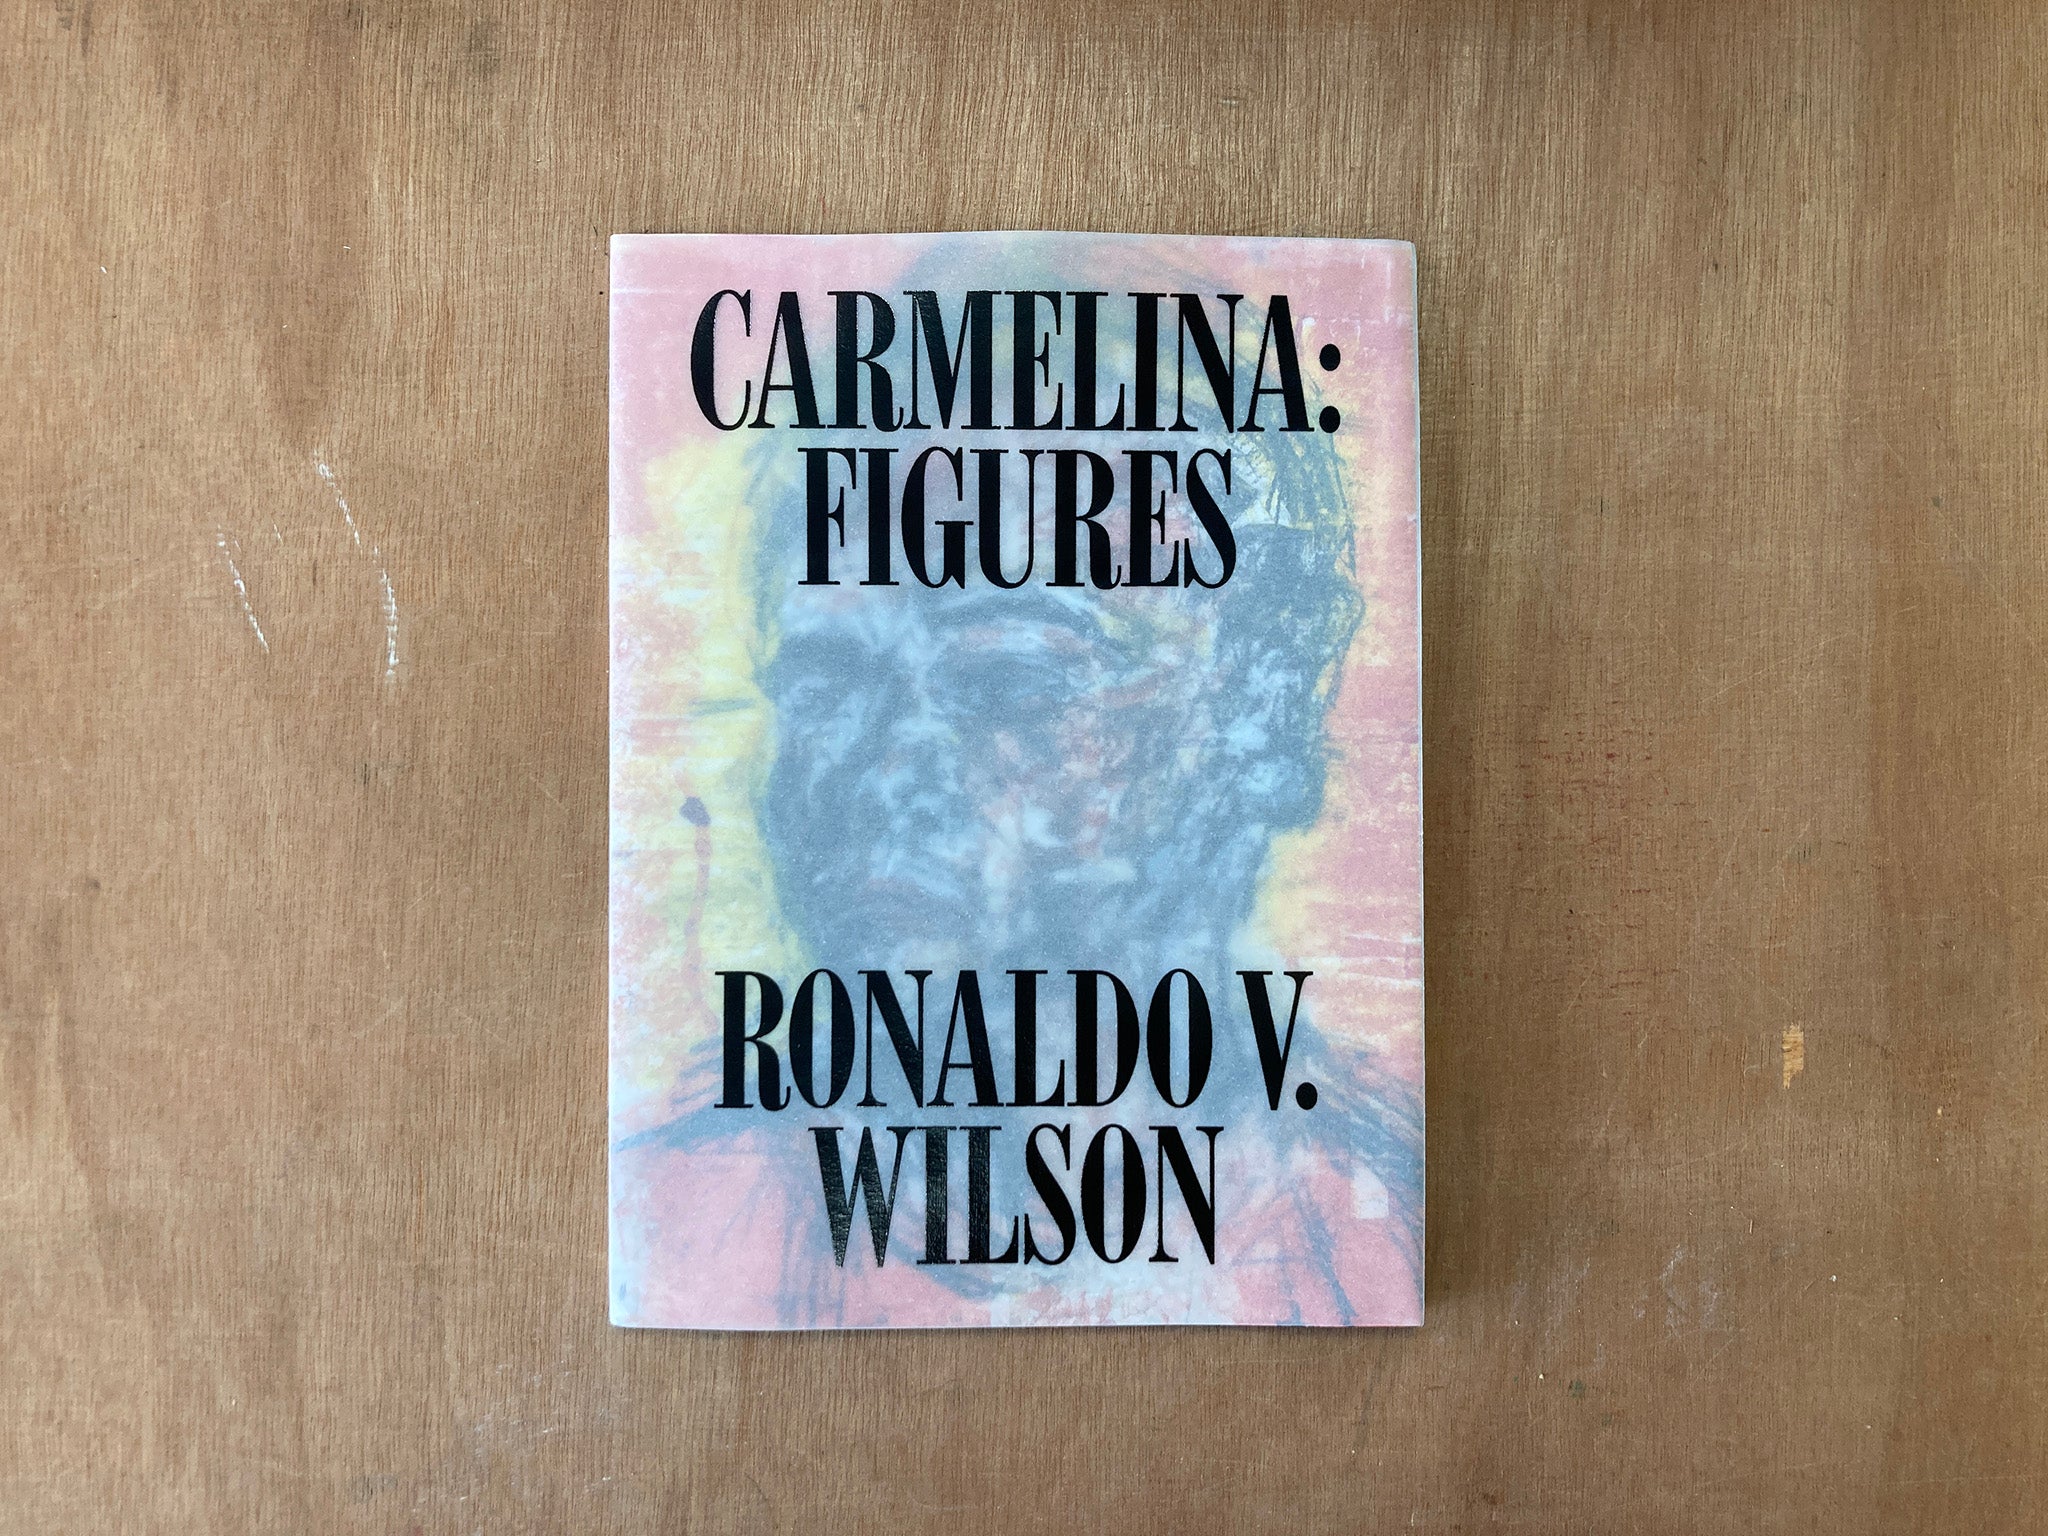 CARMELINA: FIGURES by Ronaldo V. Wilson